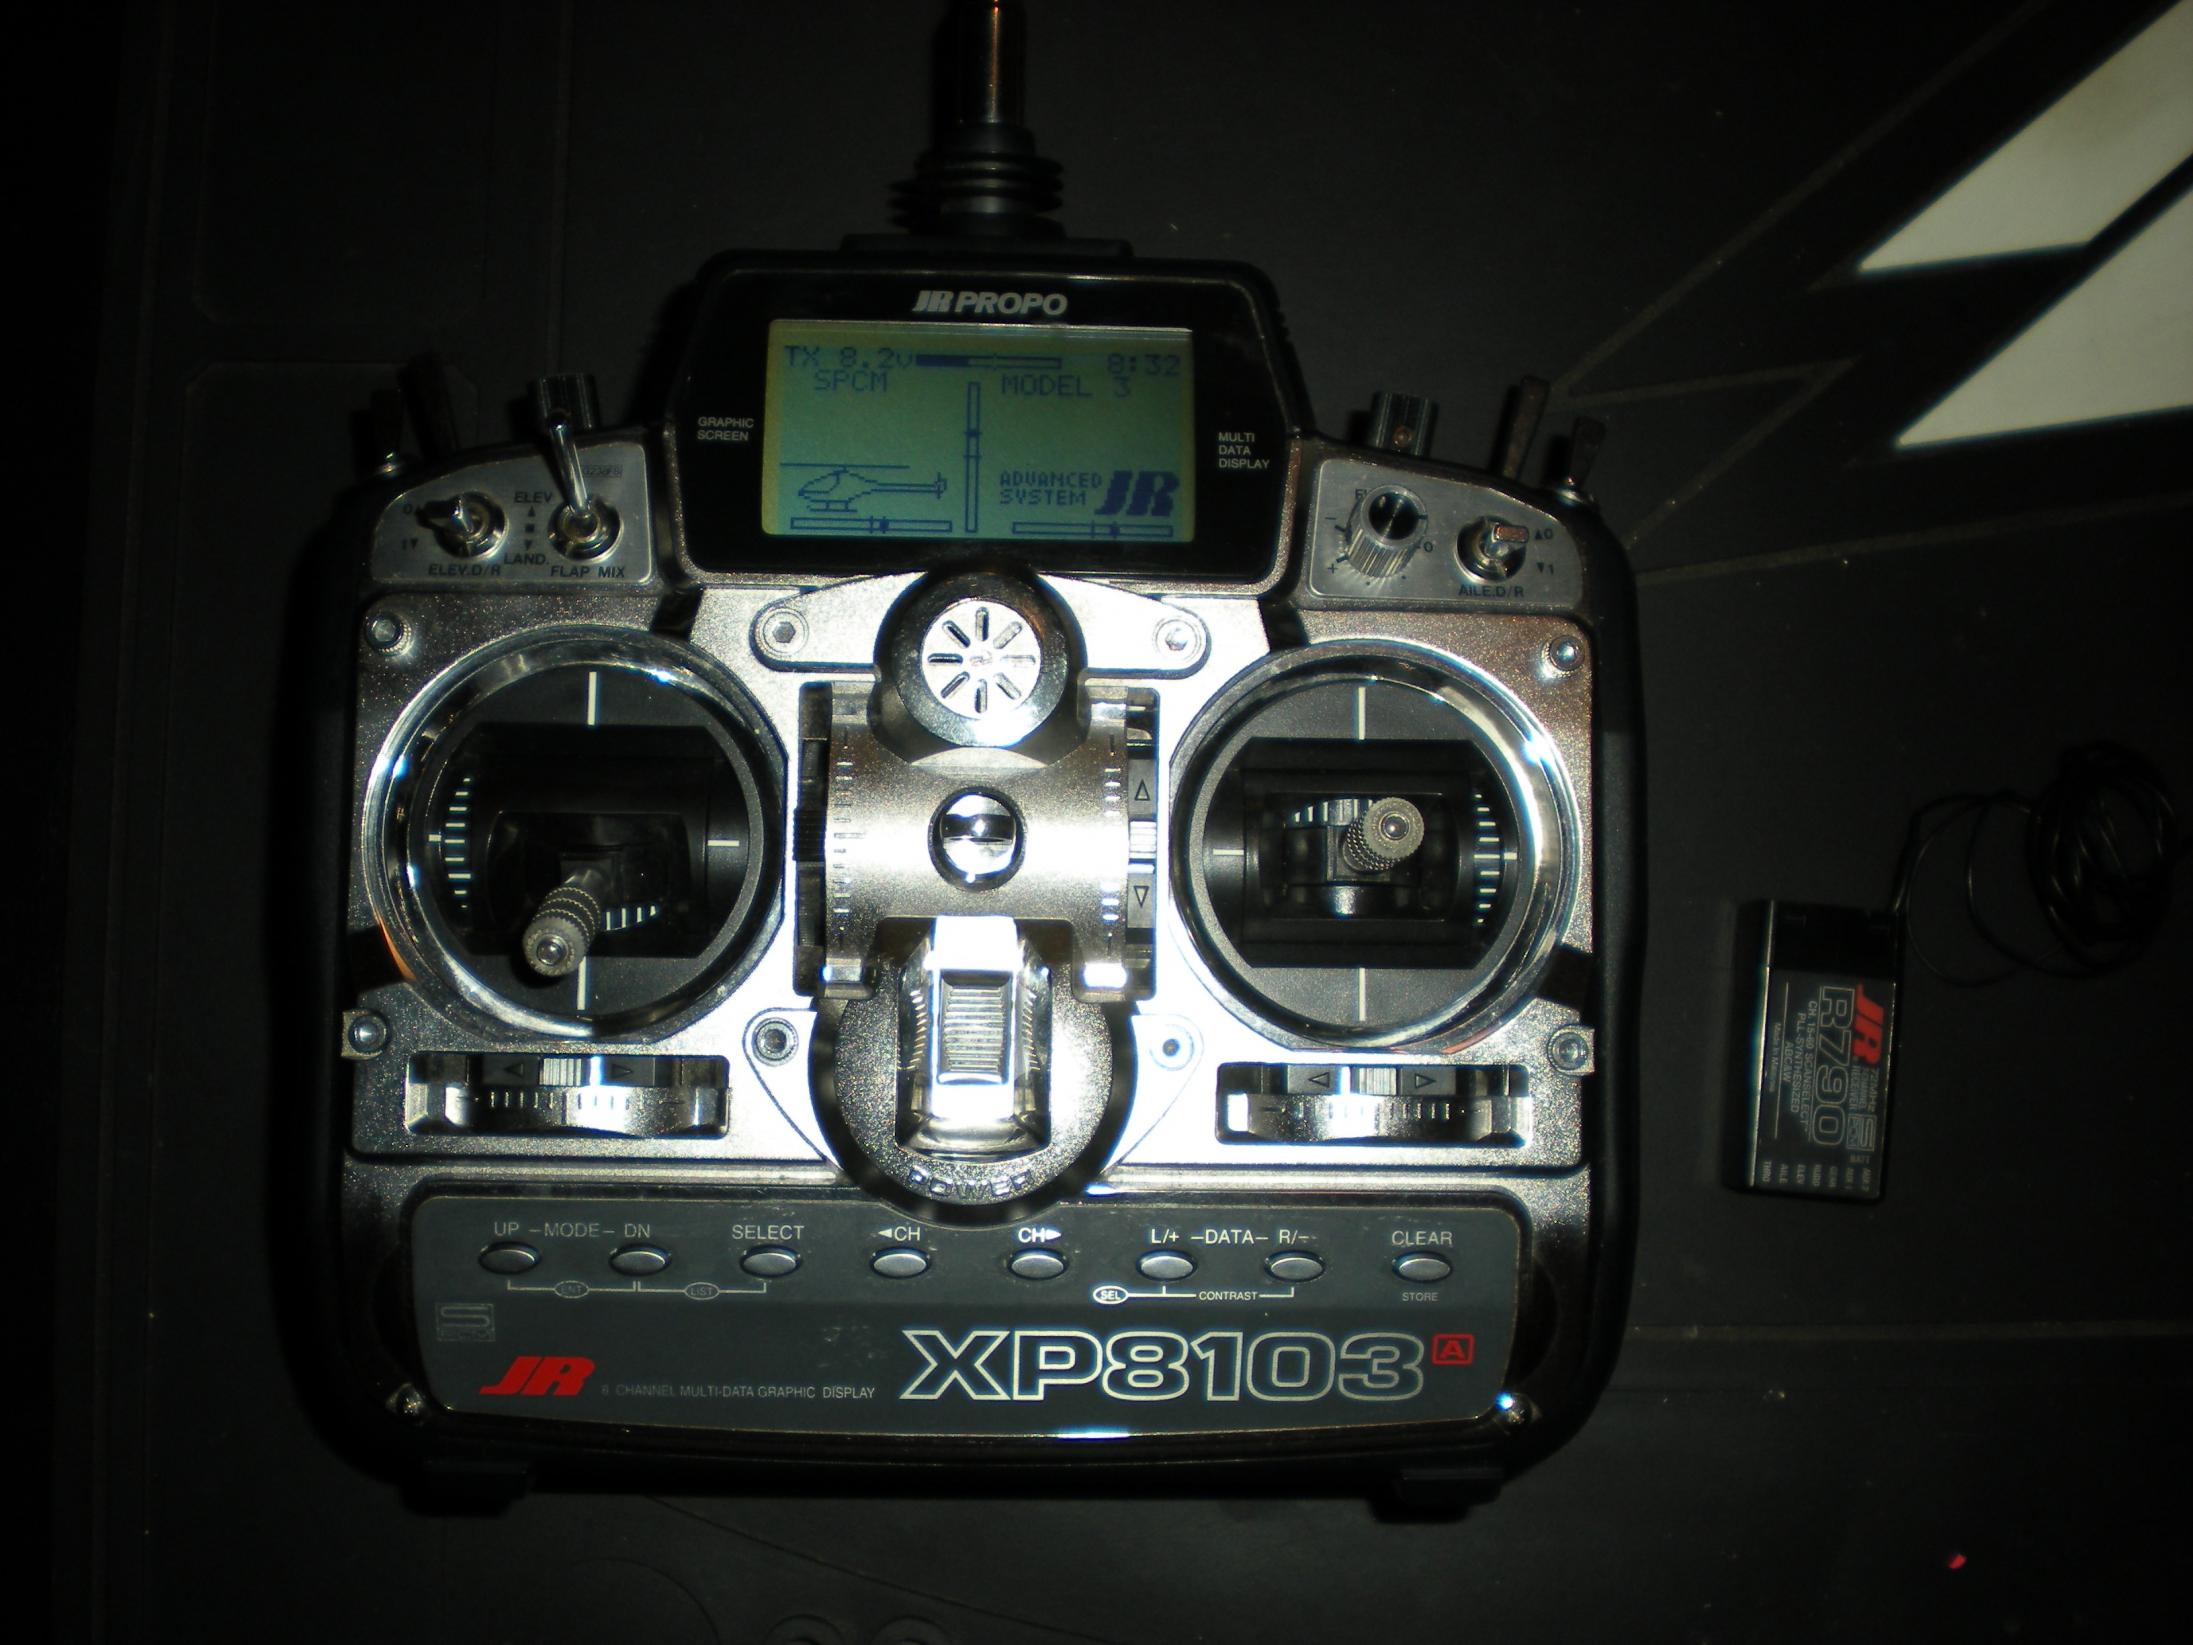 jr sx600 transmitter manual